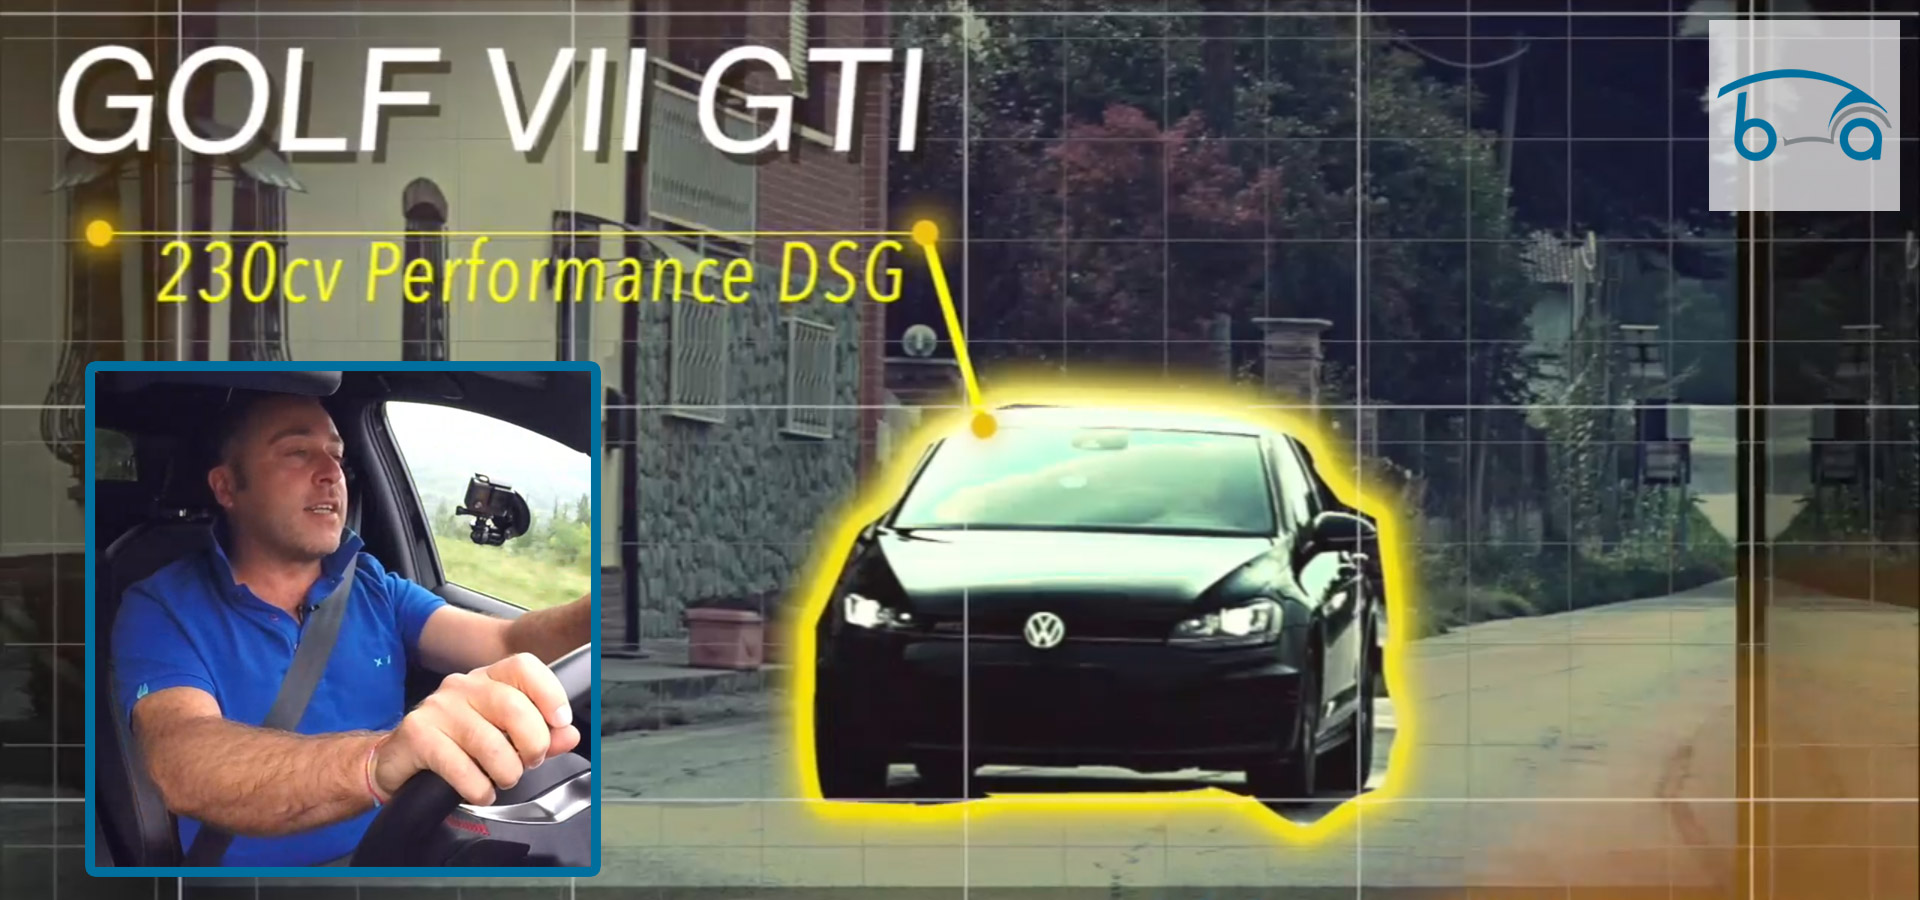 PROVA SU STRADA | Volkswagen Golf VII 2.0 GTI 230 CV Performance DSG